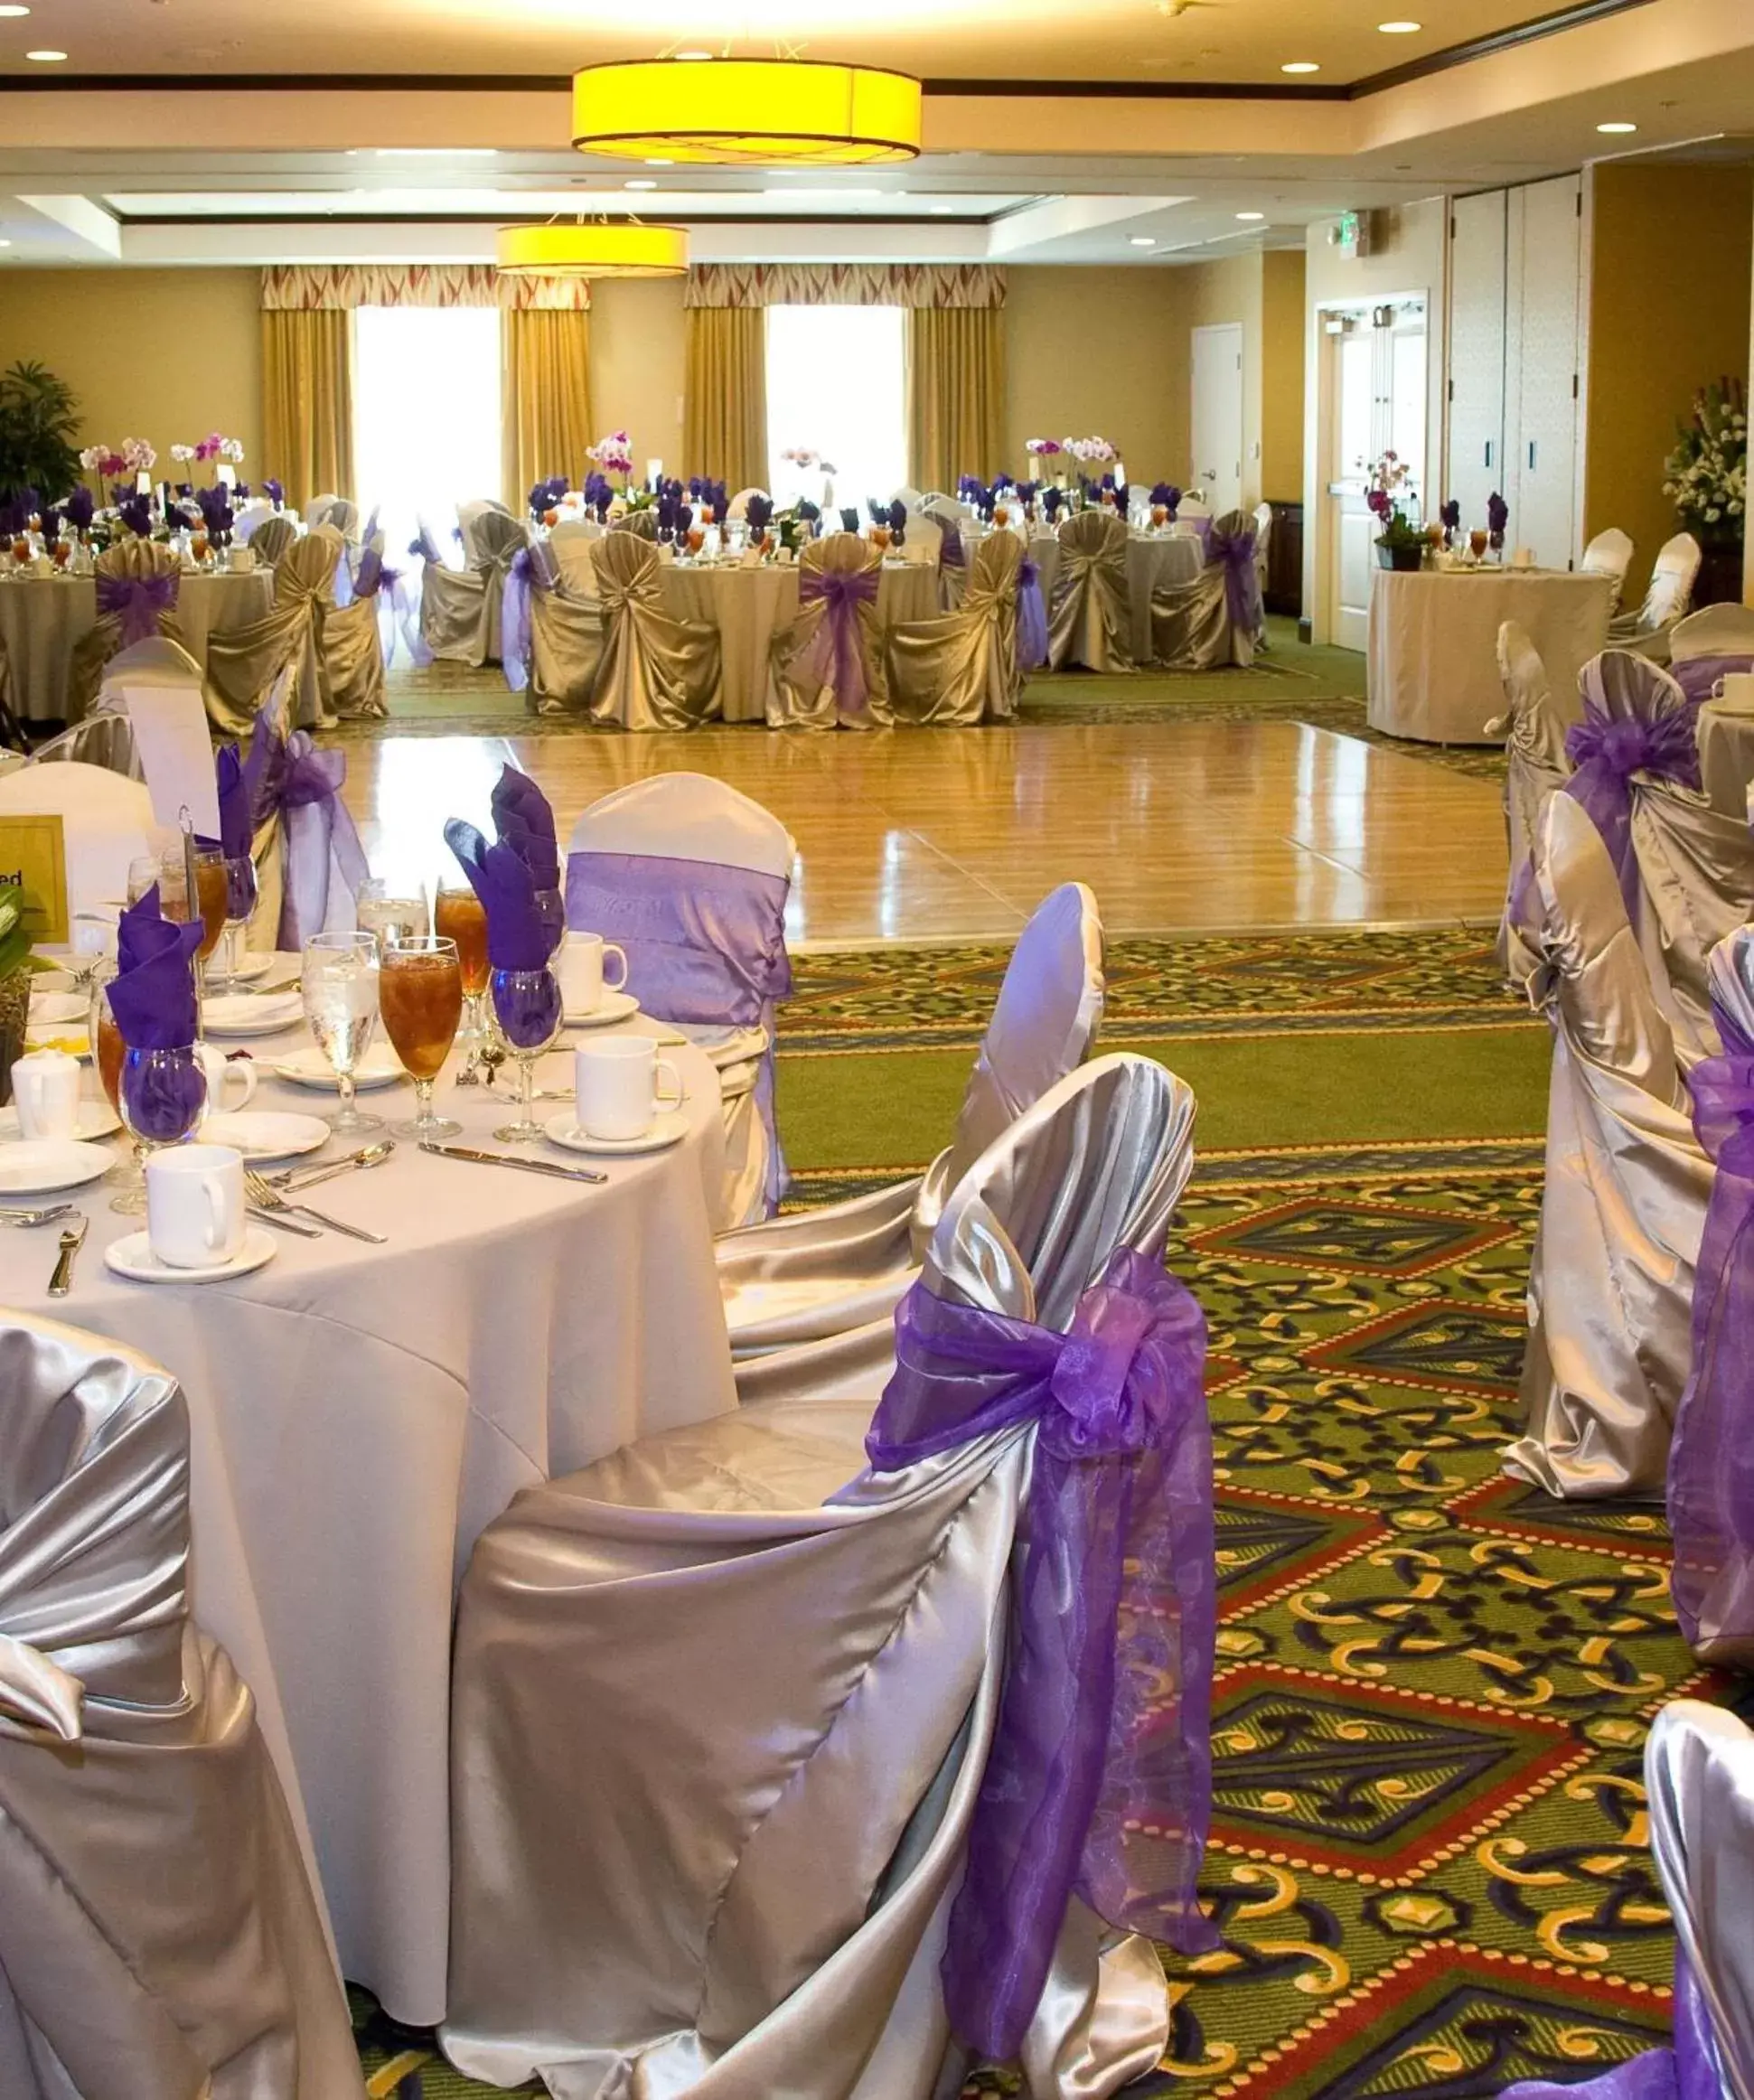 Meeting/conference room, Banquet Facilities in Hilton Garden Inn Fontana